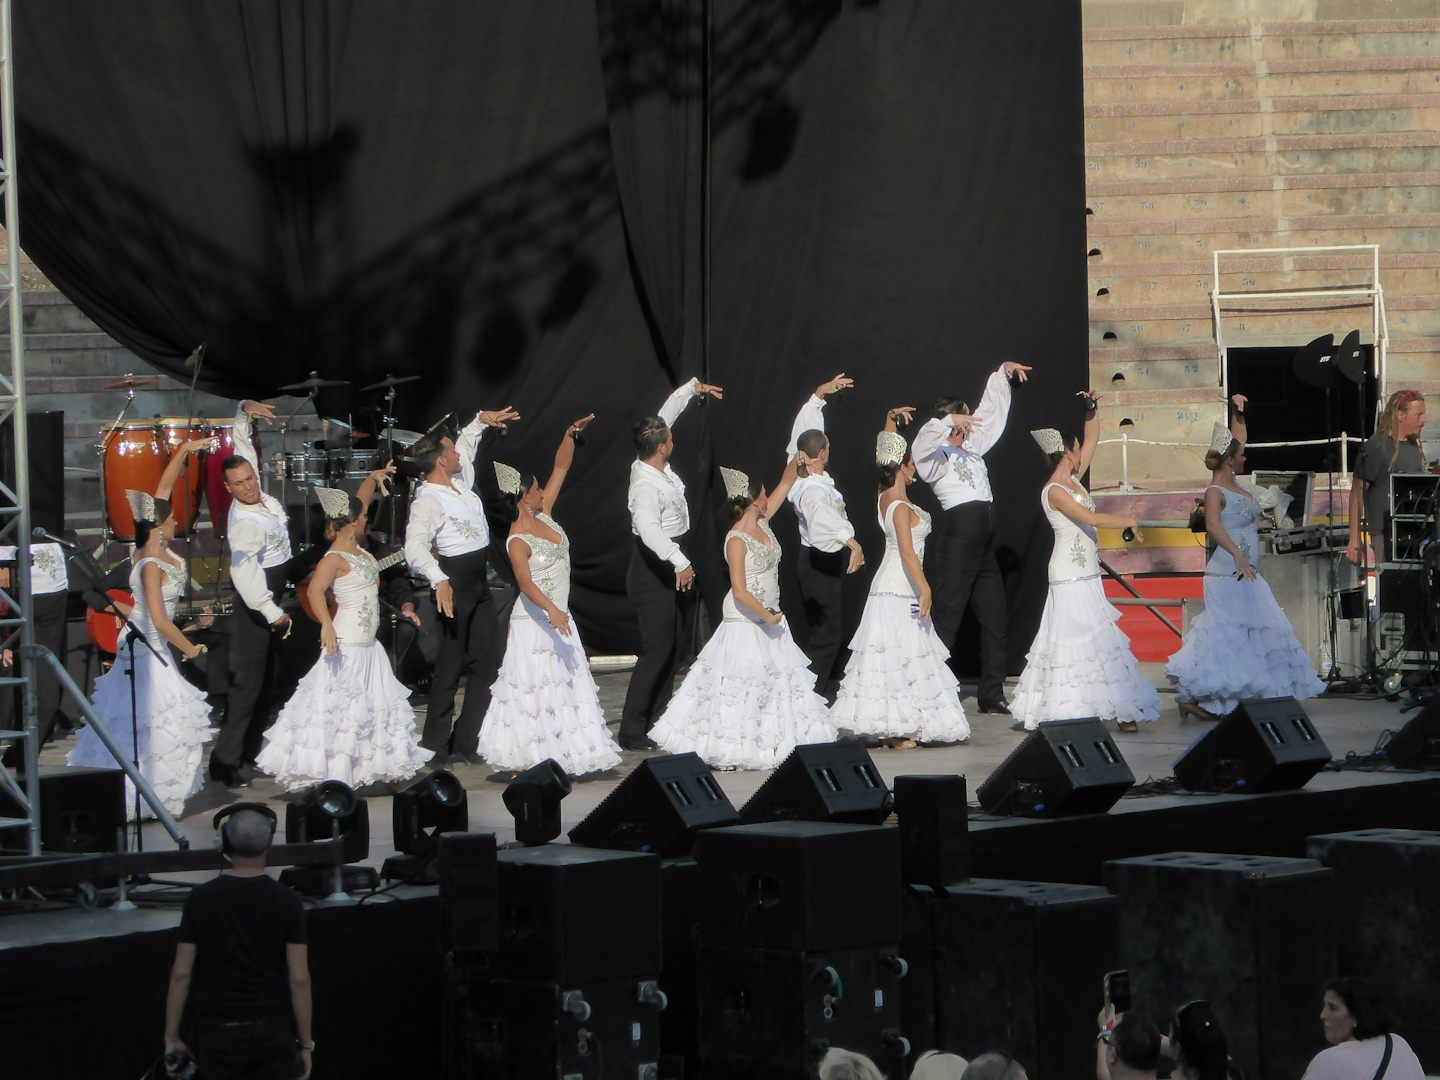 President's Cruise El Toro party in Palma - Flamenco Dancers